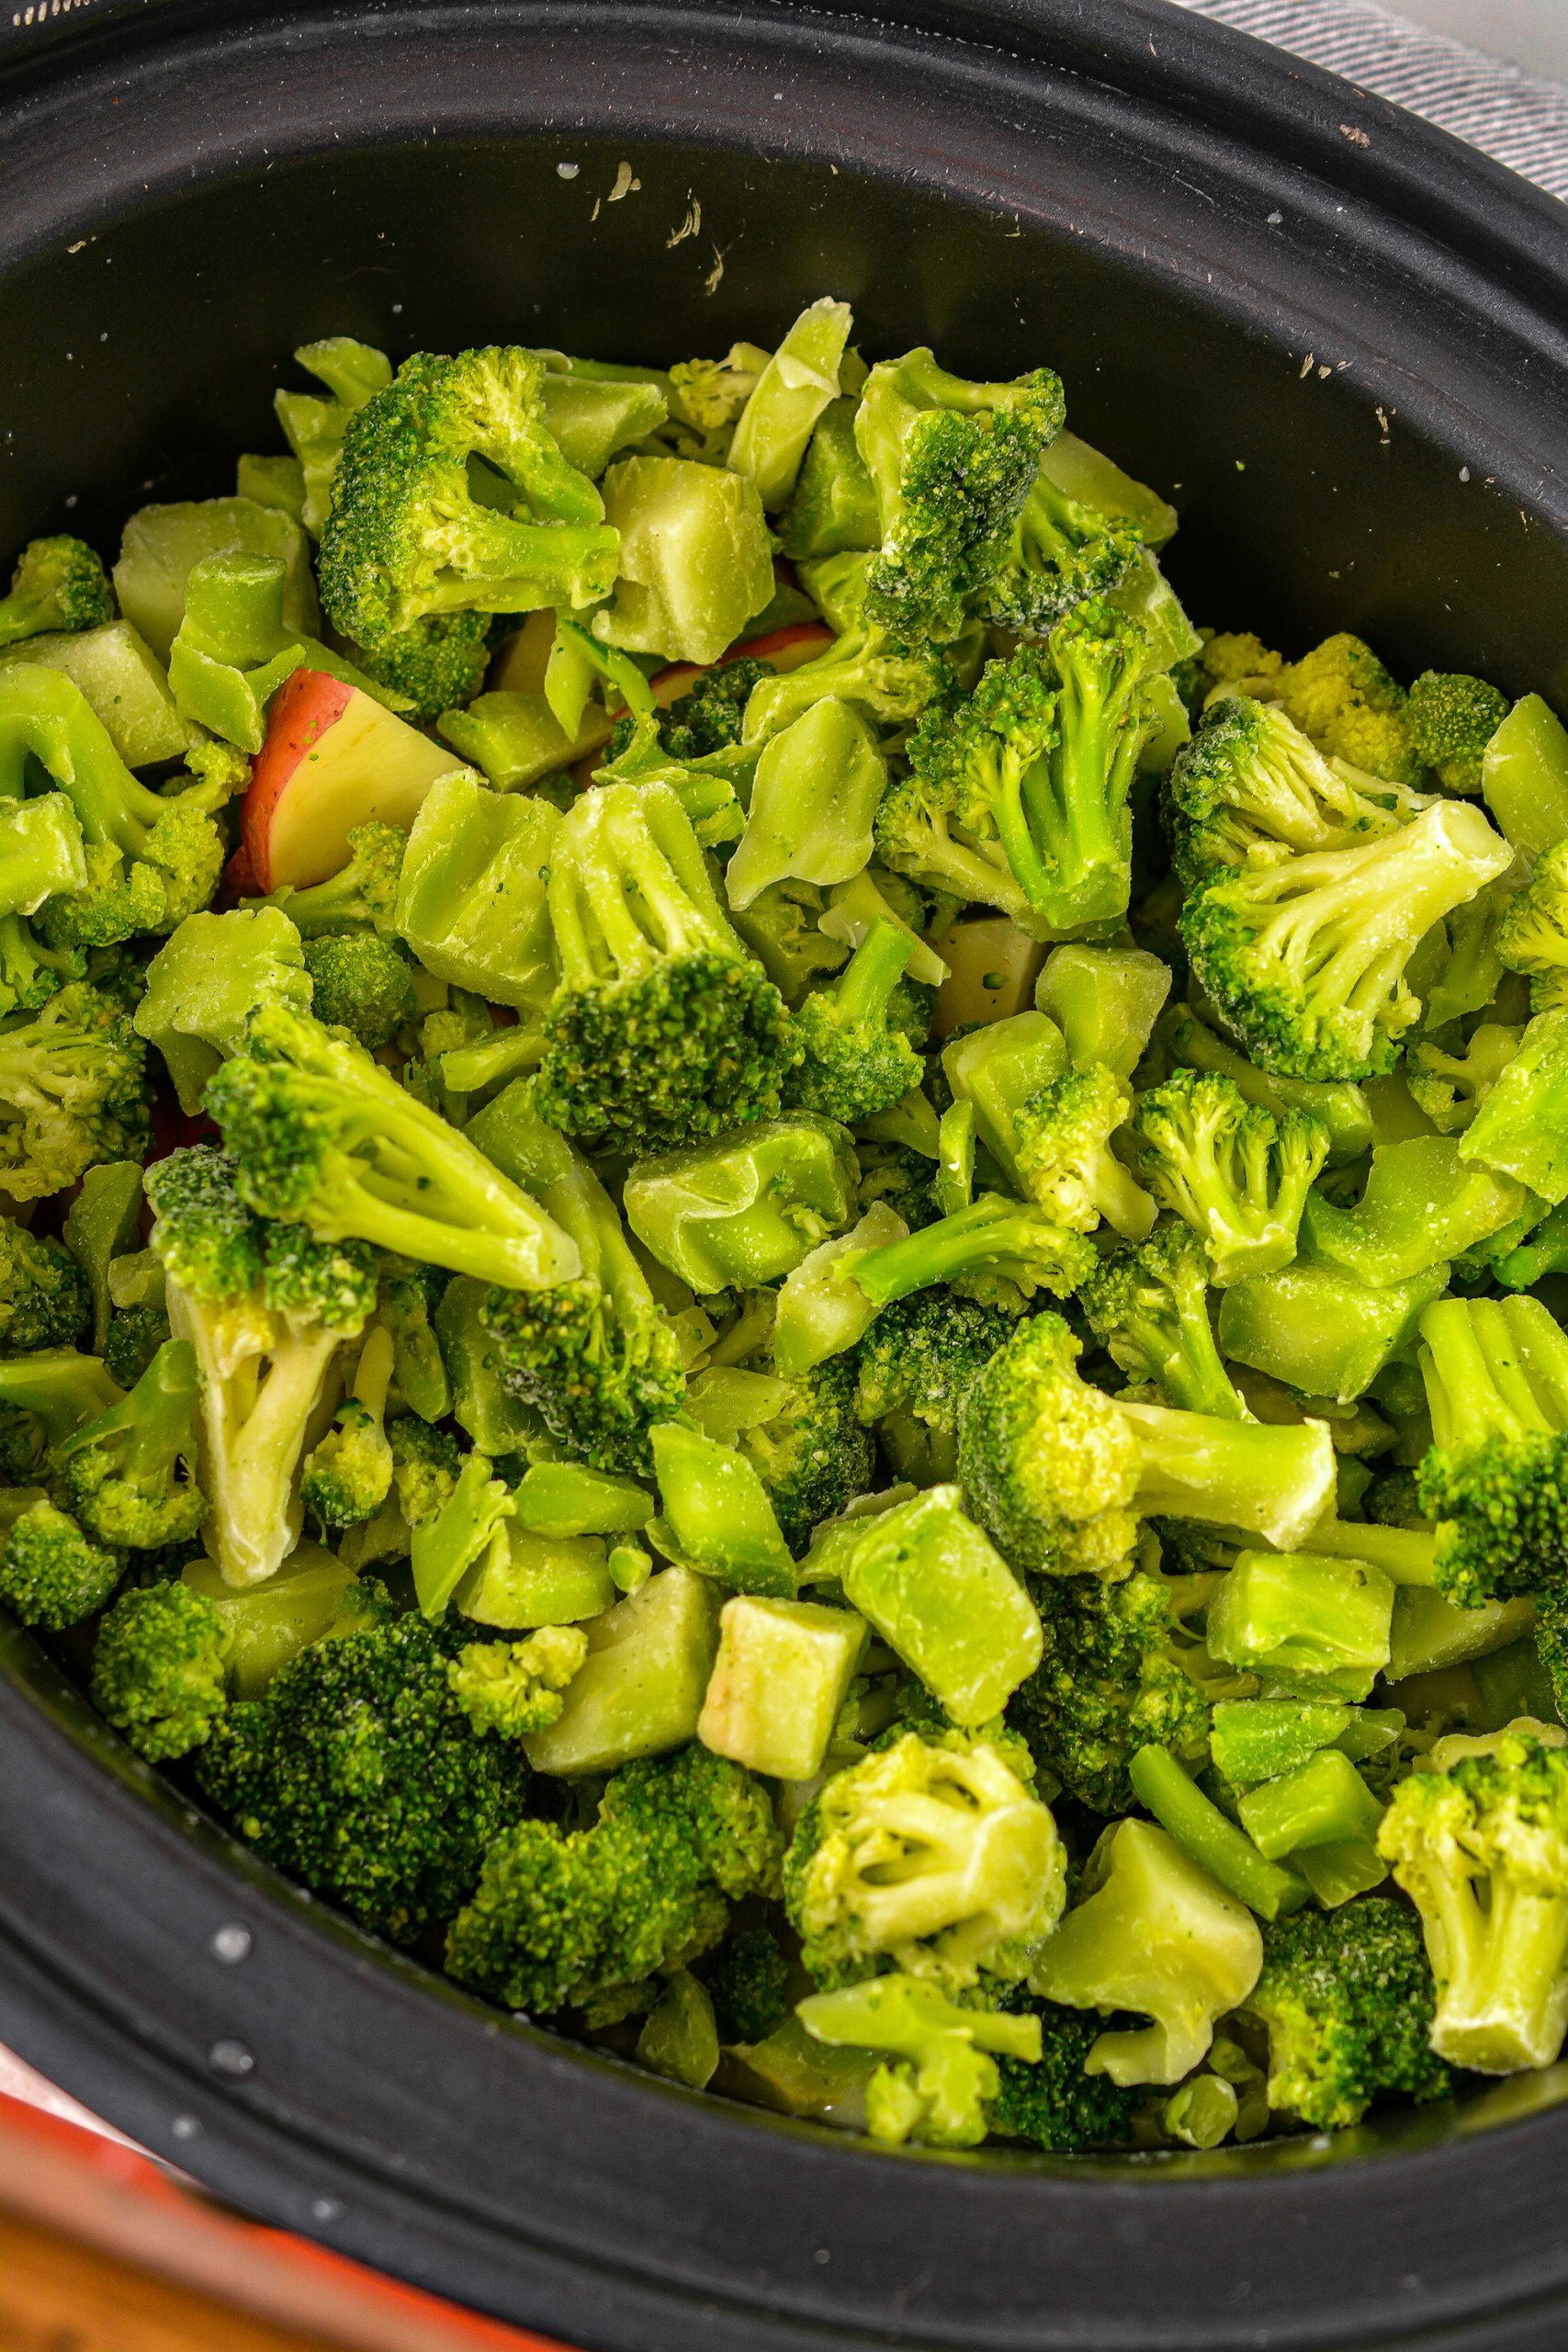 Add broccoli florets.